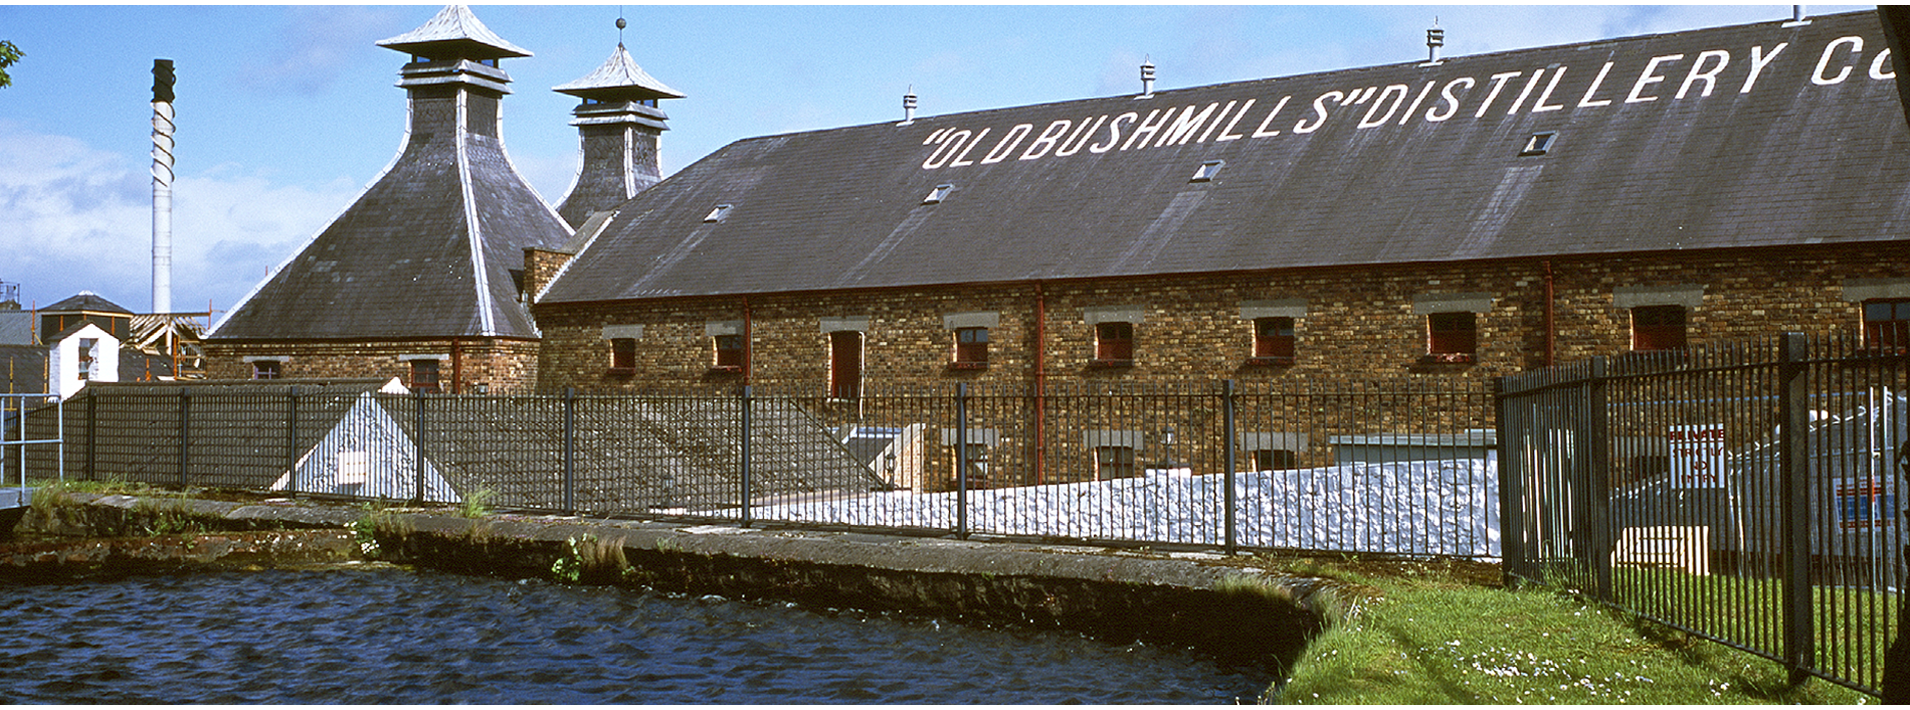 Landscape image of the Old Bushmills Whiskey Distillery